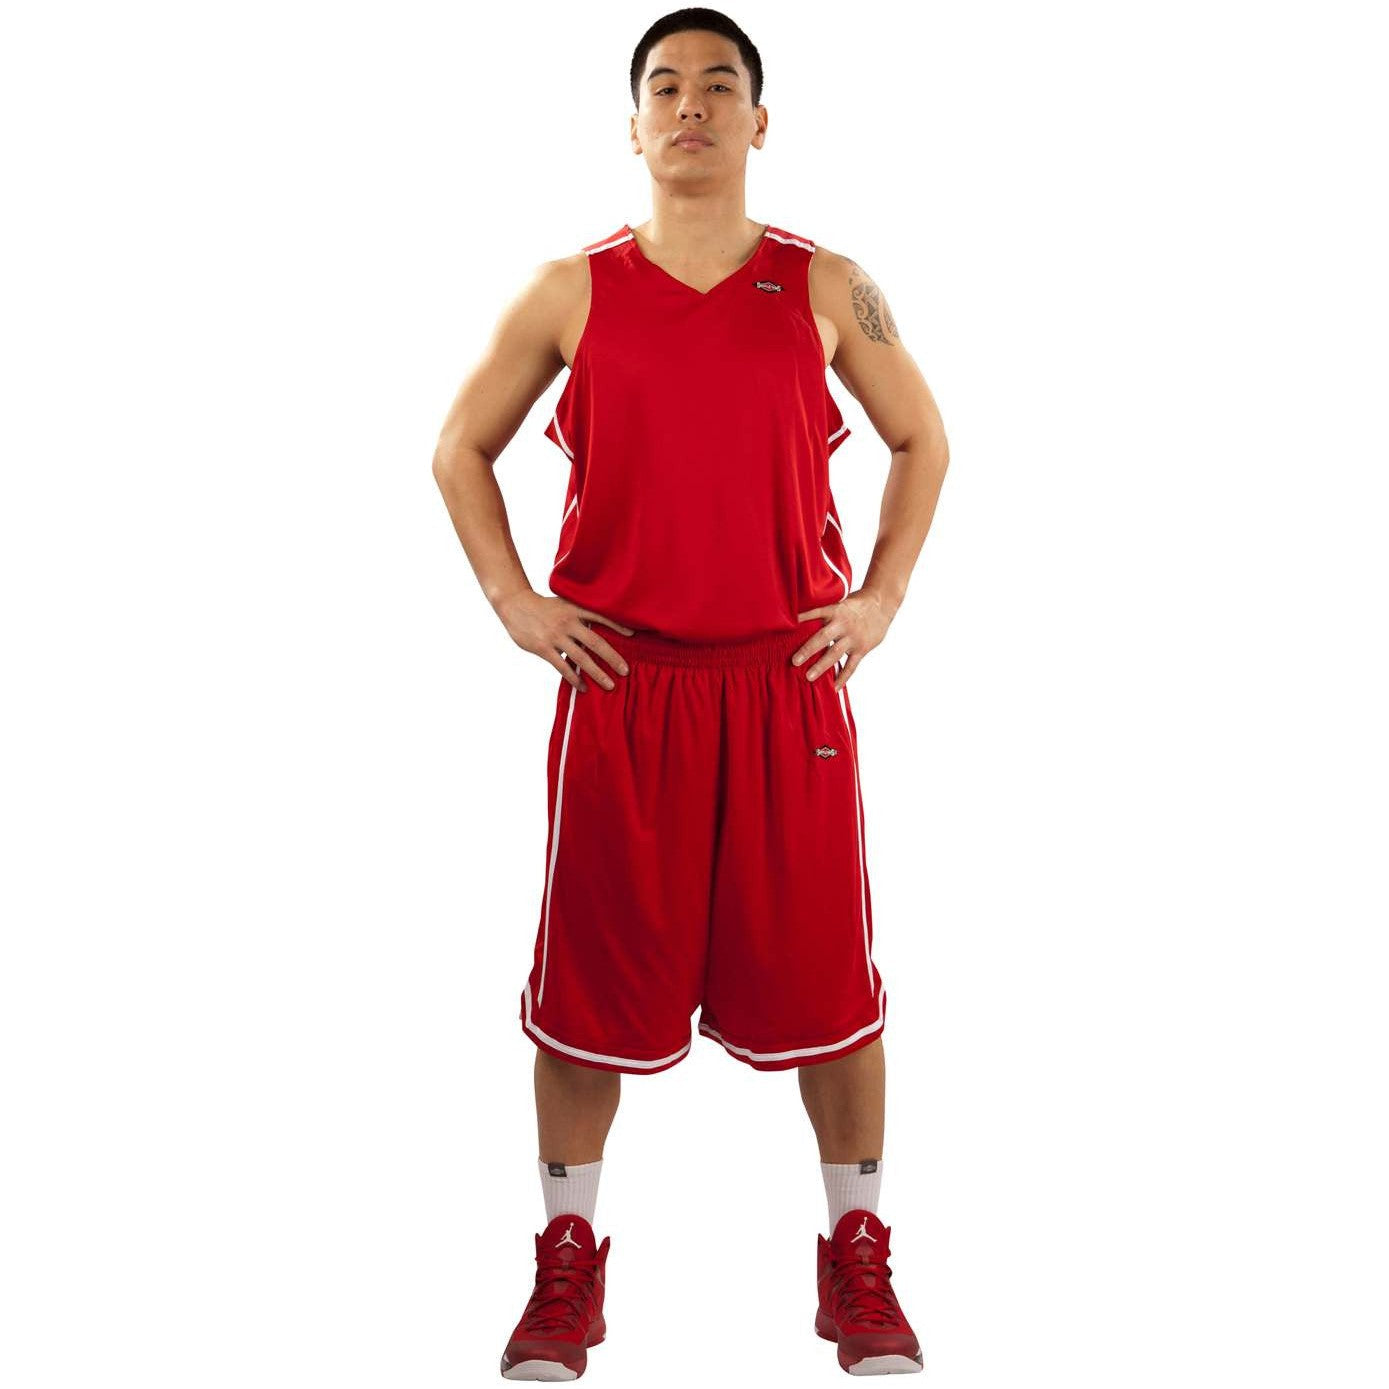 Shirts & Skins Scarlet/White League Reversible Basketball Uniform